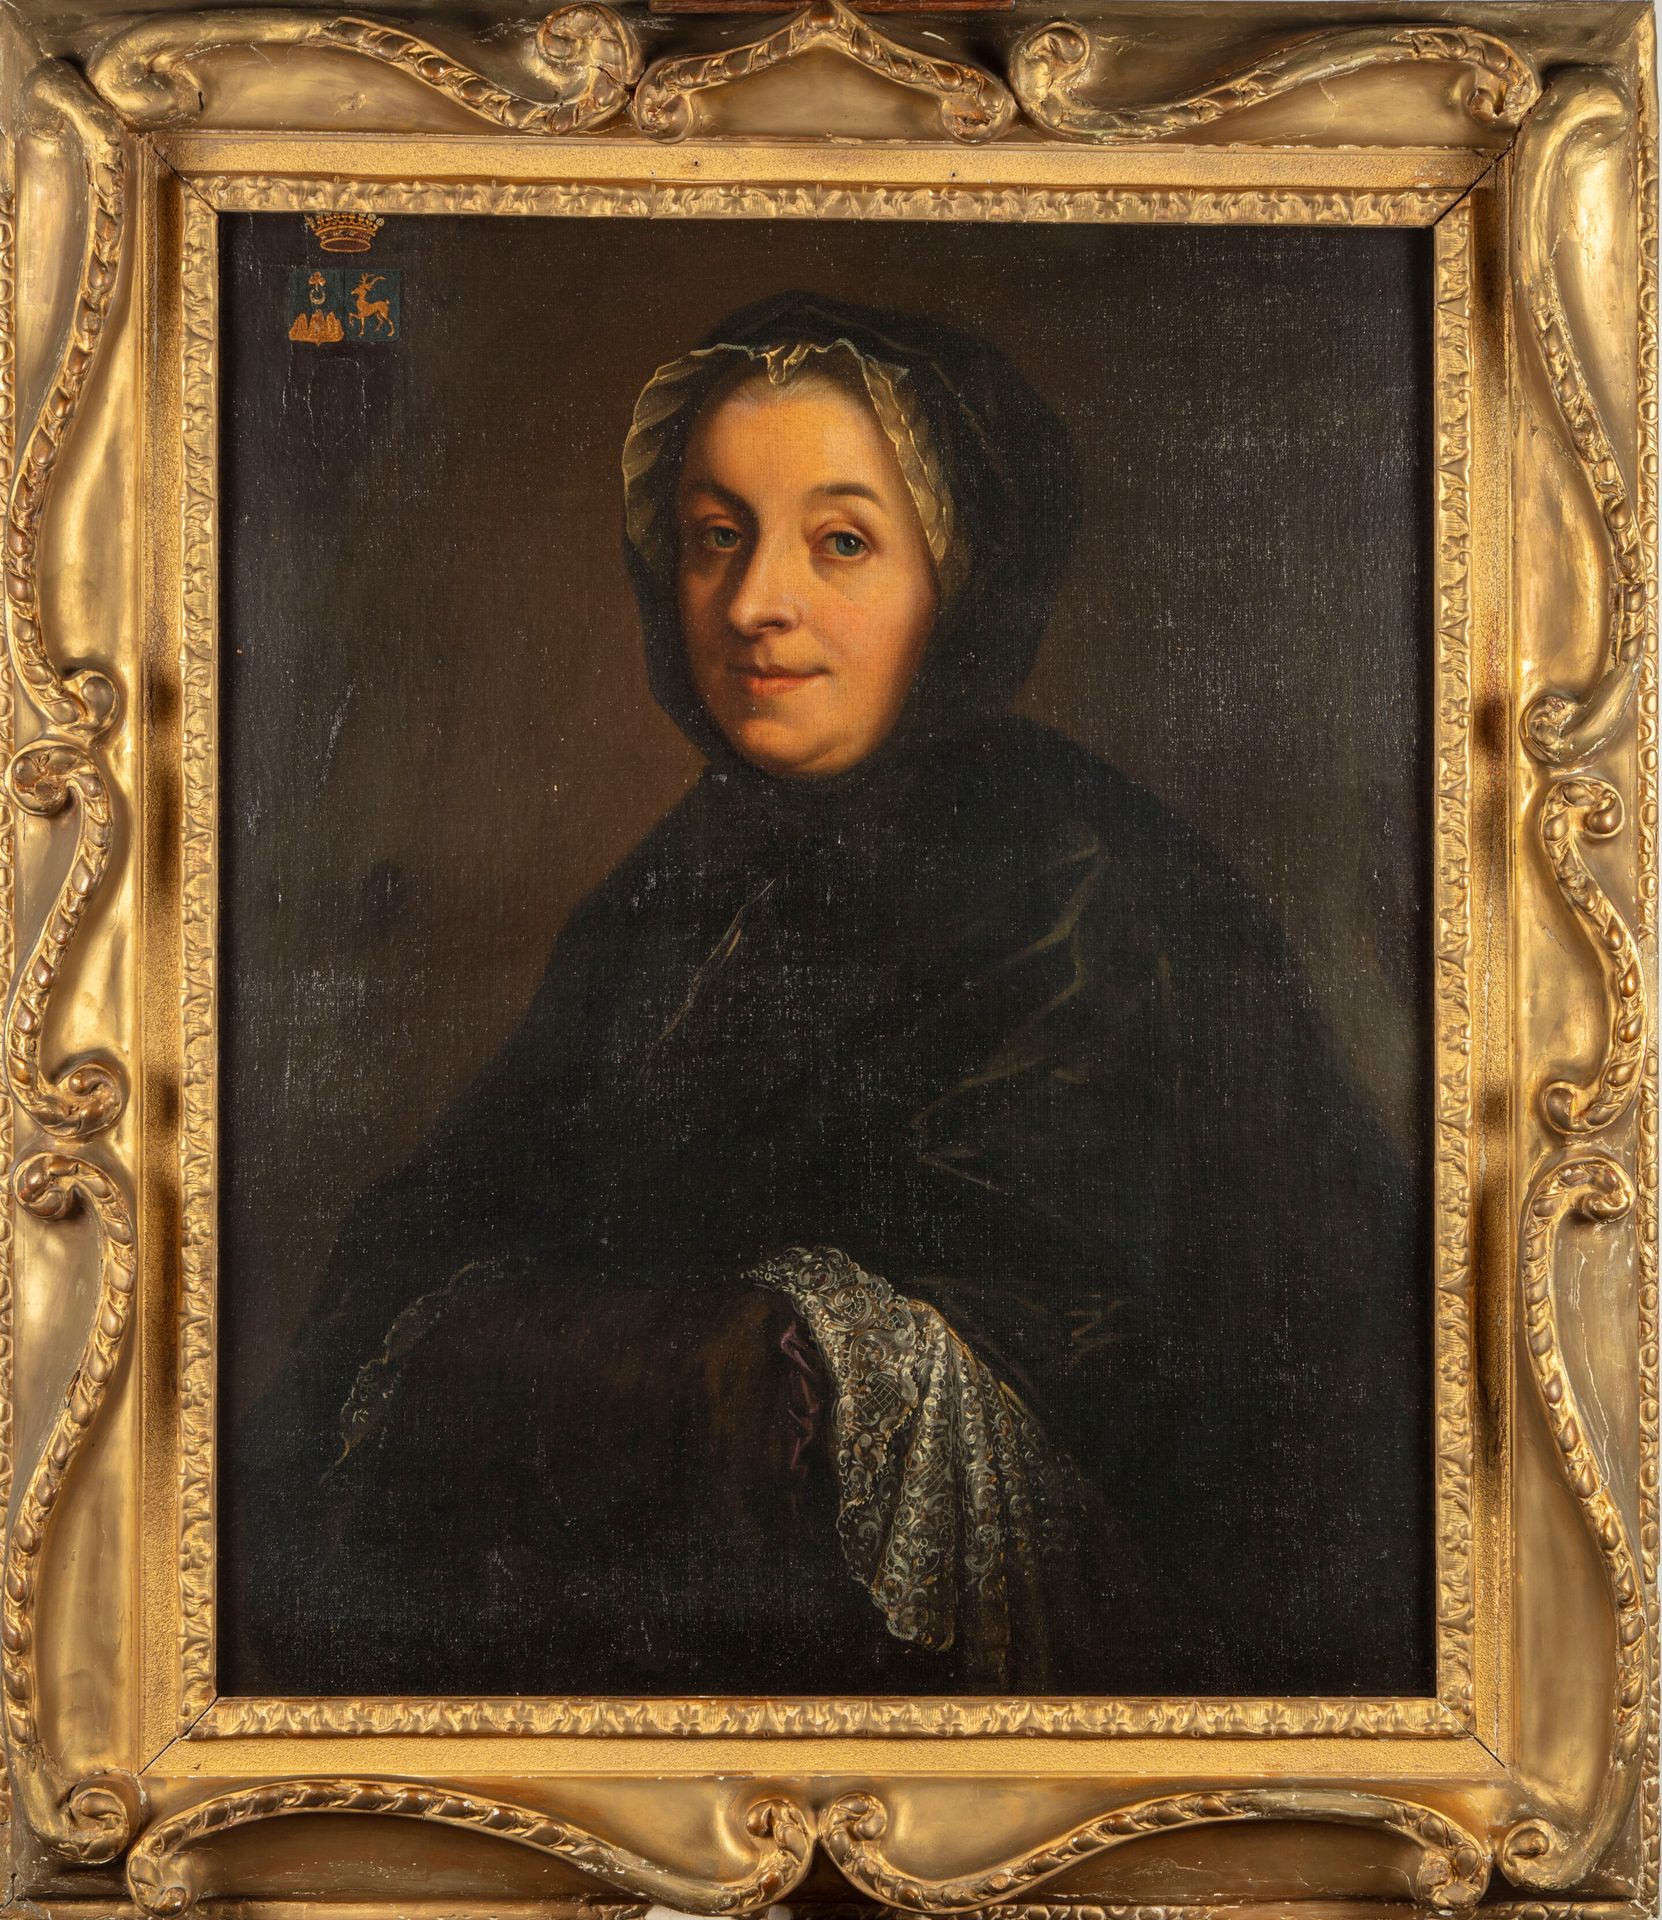 ECOLE FRANCAISE 18世纪法国学校

安妮-玛丽-德-赫辛格的推定画像

布面油画，rrentoil

81 x 64,5 cm

修复，木质和镀&hellip;